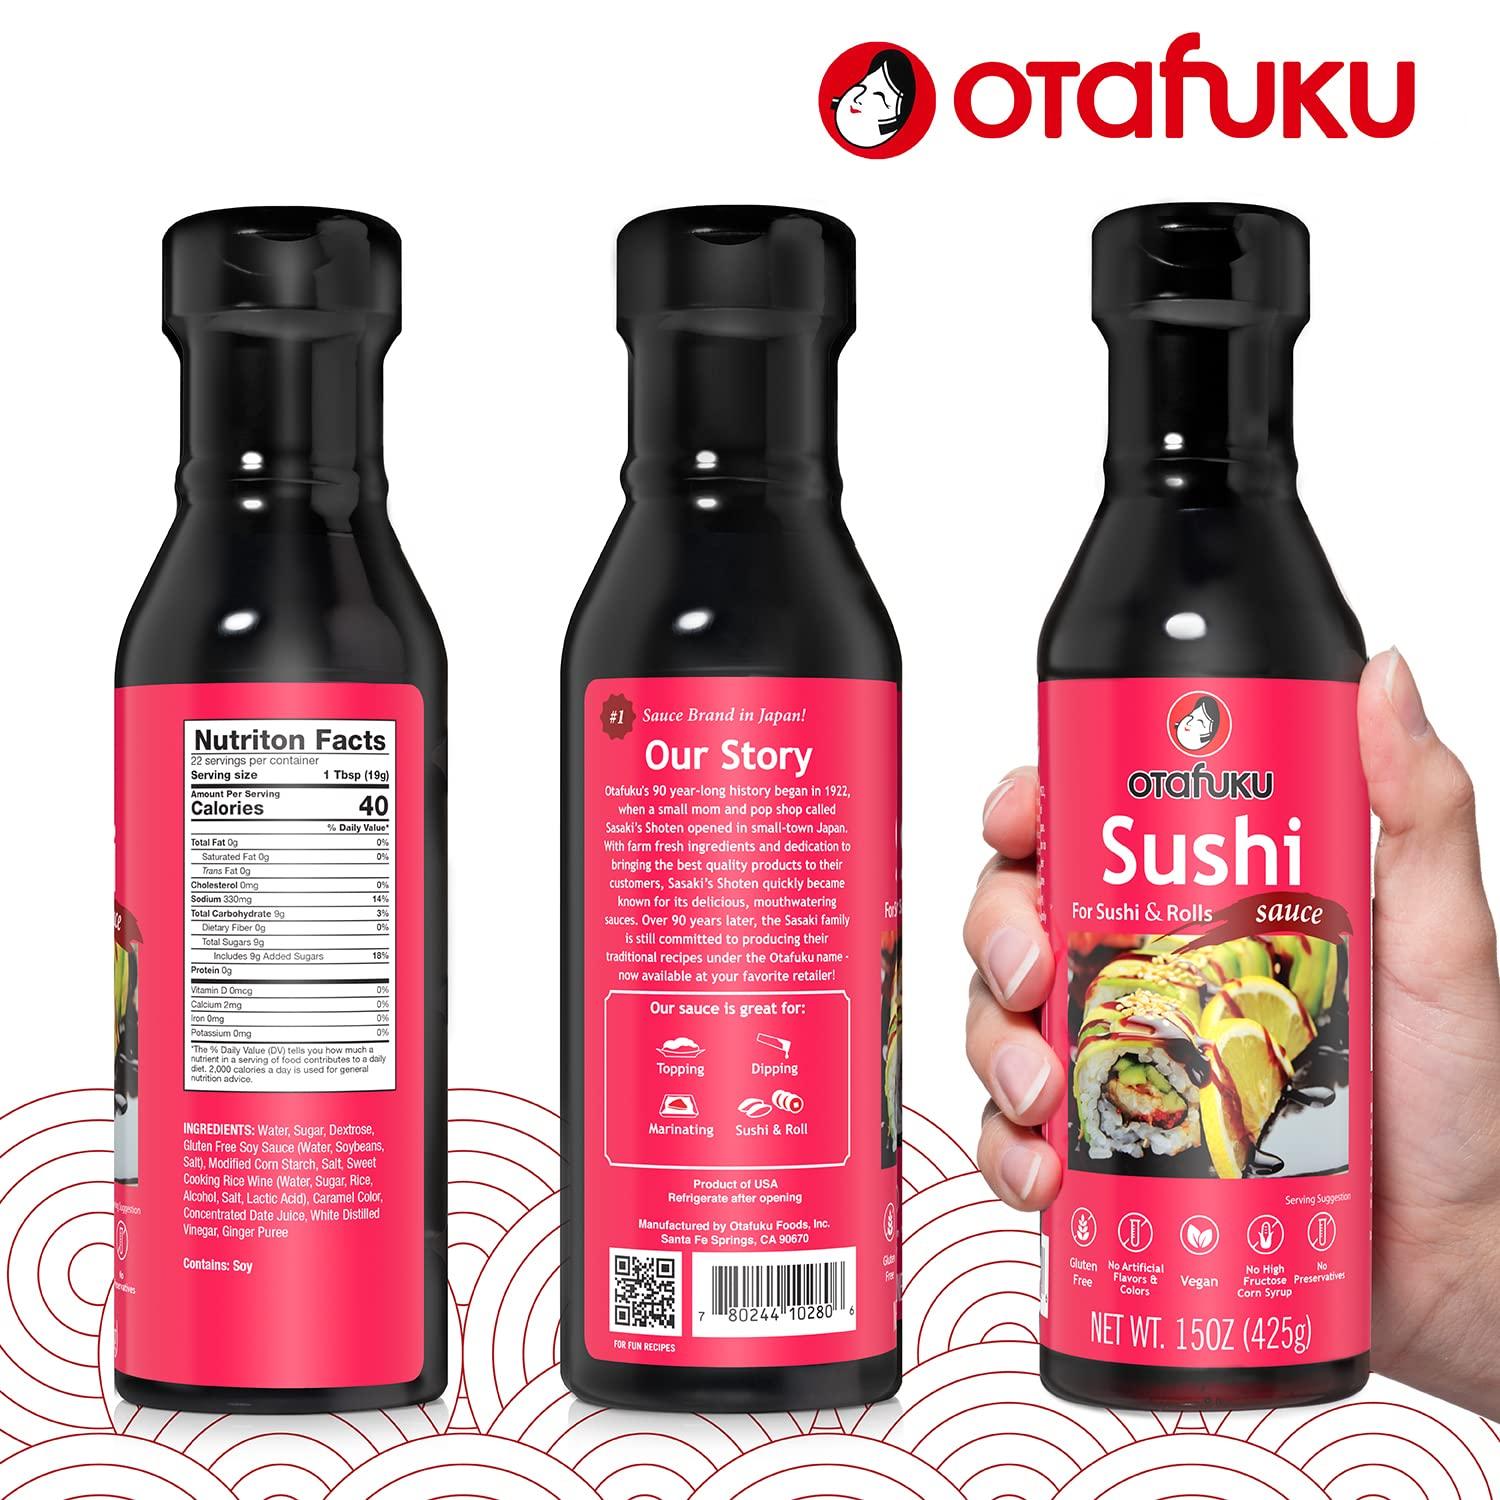 SUZUKATSU SUSHI UNAGI SAUCE, Asian Sauces & Oils